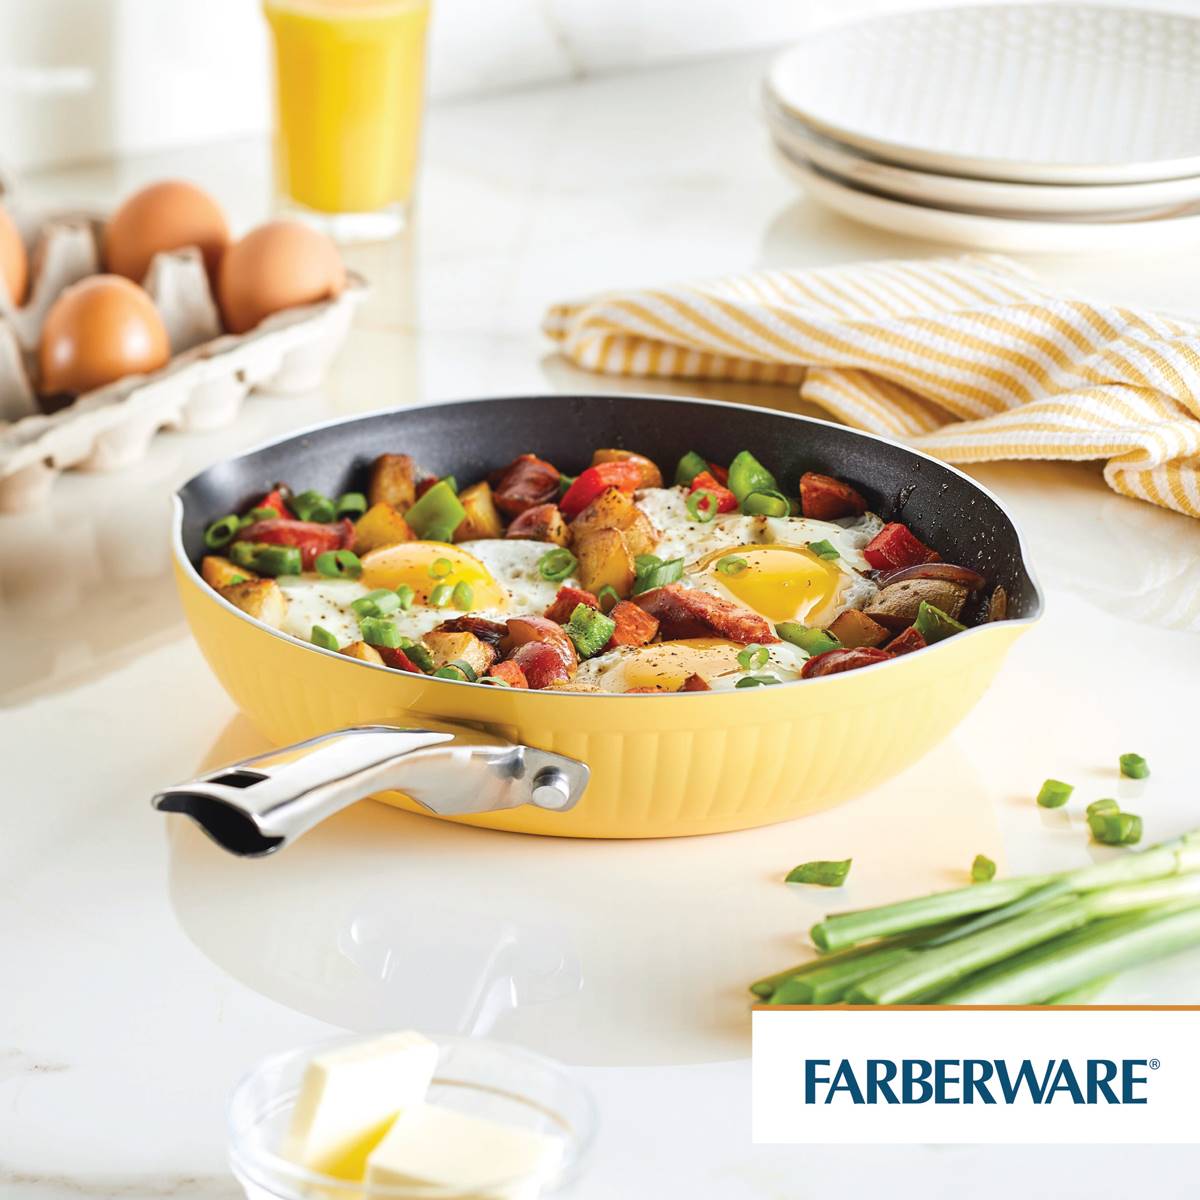 Farberware(R) Style 10pc. Nonstick Cookware Pots & Pans Set